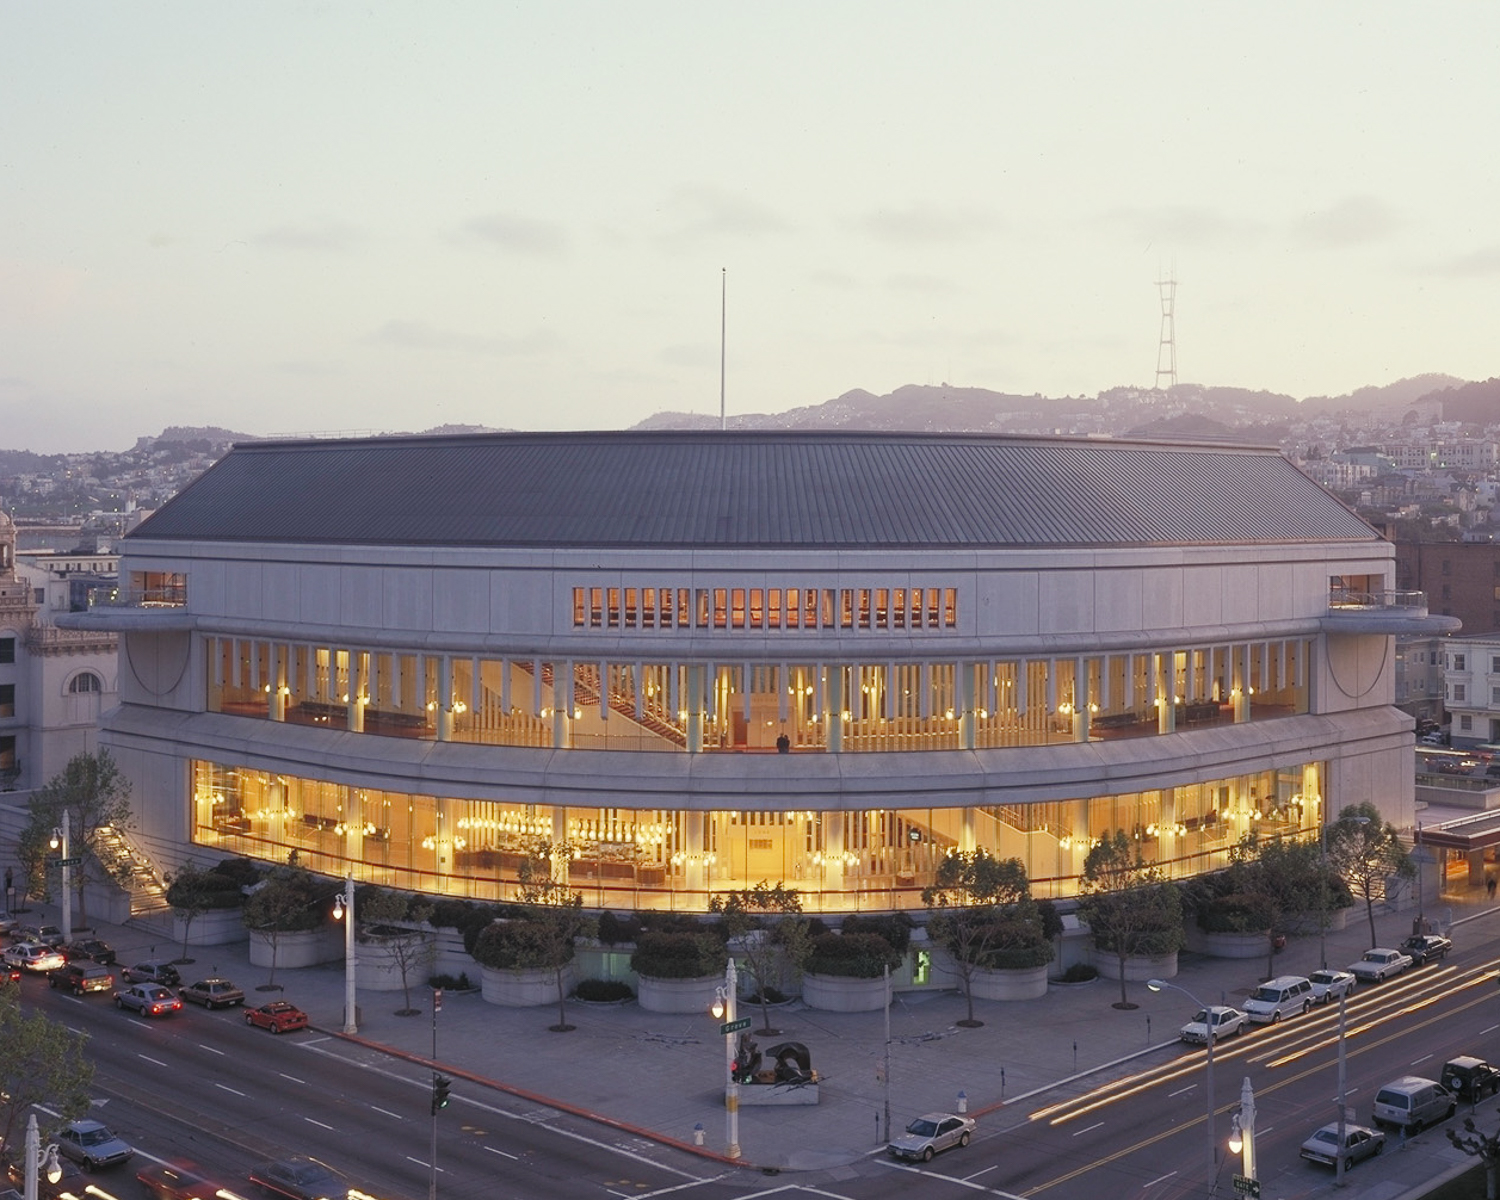 San Francisco Symphony Hall aerial view, image by Craig Mole courtesy the Symphony